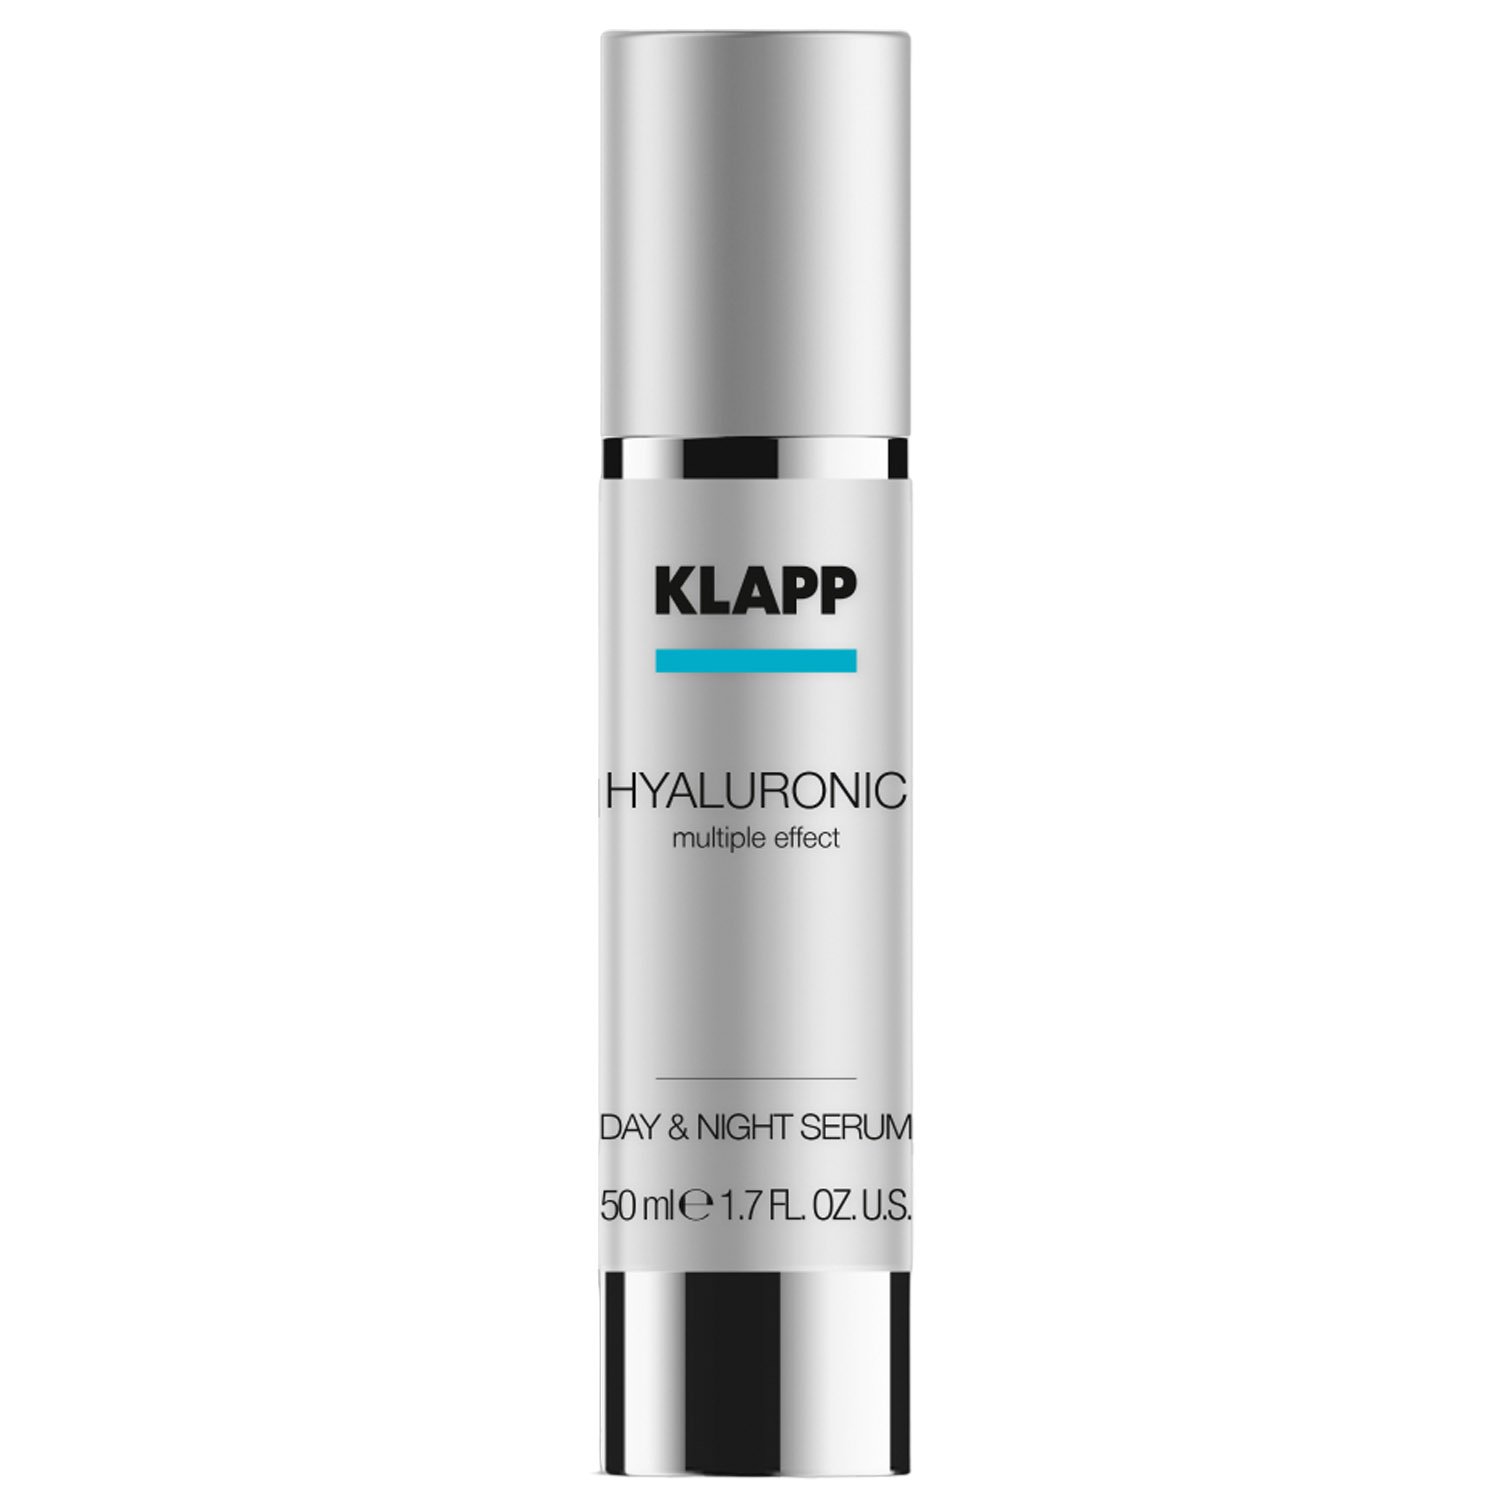 Сыворотка для лица Klapp Hyaluronic Multiple Effect Day & Night Serum, 50 мл - фото 1